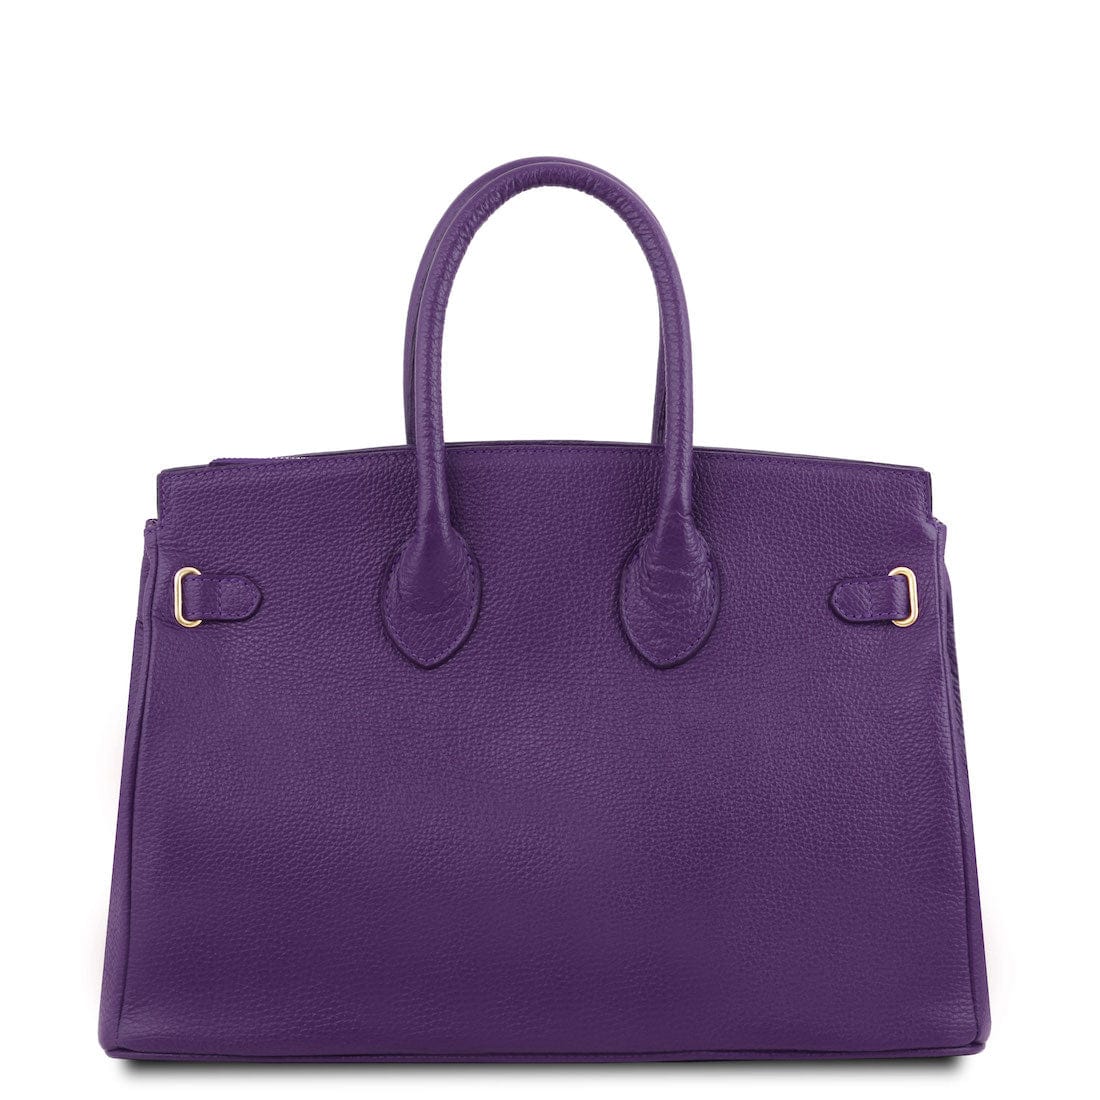 TL Bag - Leather handbag with golden hardware | TL141529 - Premium Leather handbags - Shop now at San Rocco Italia